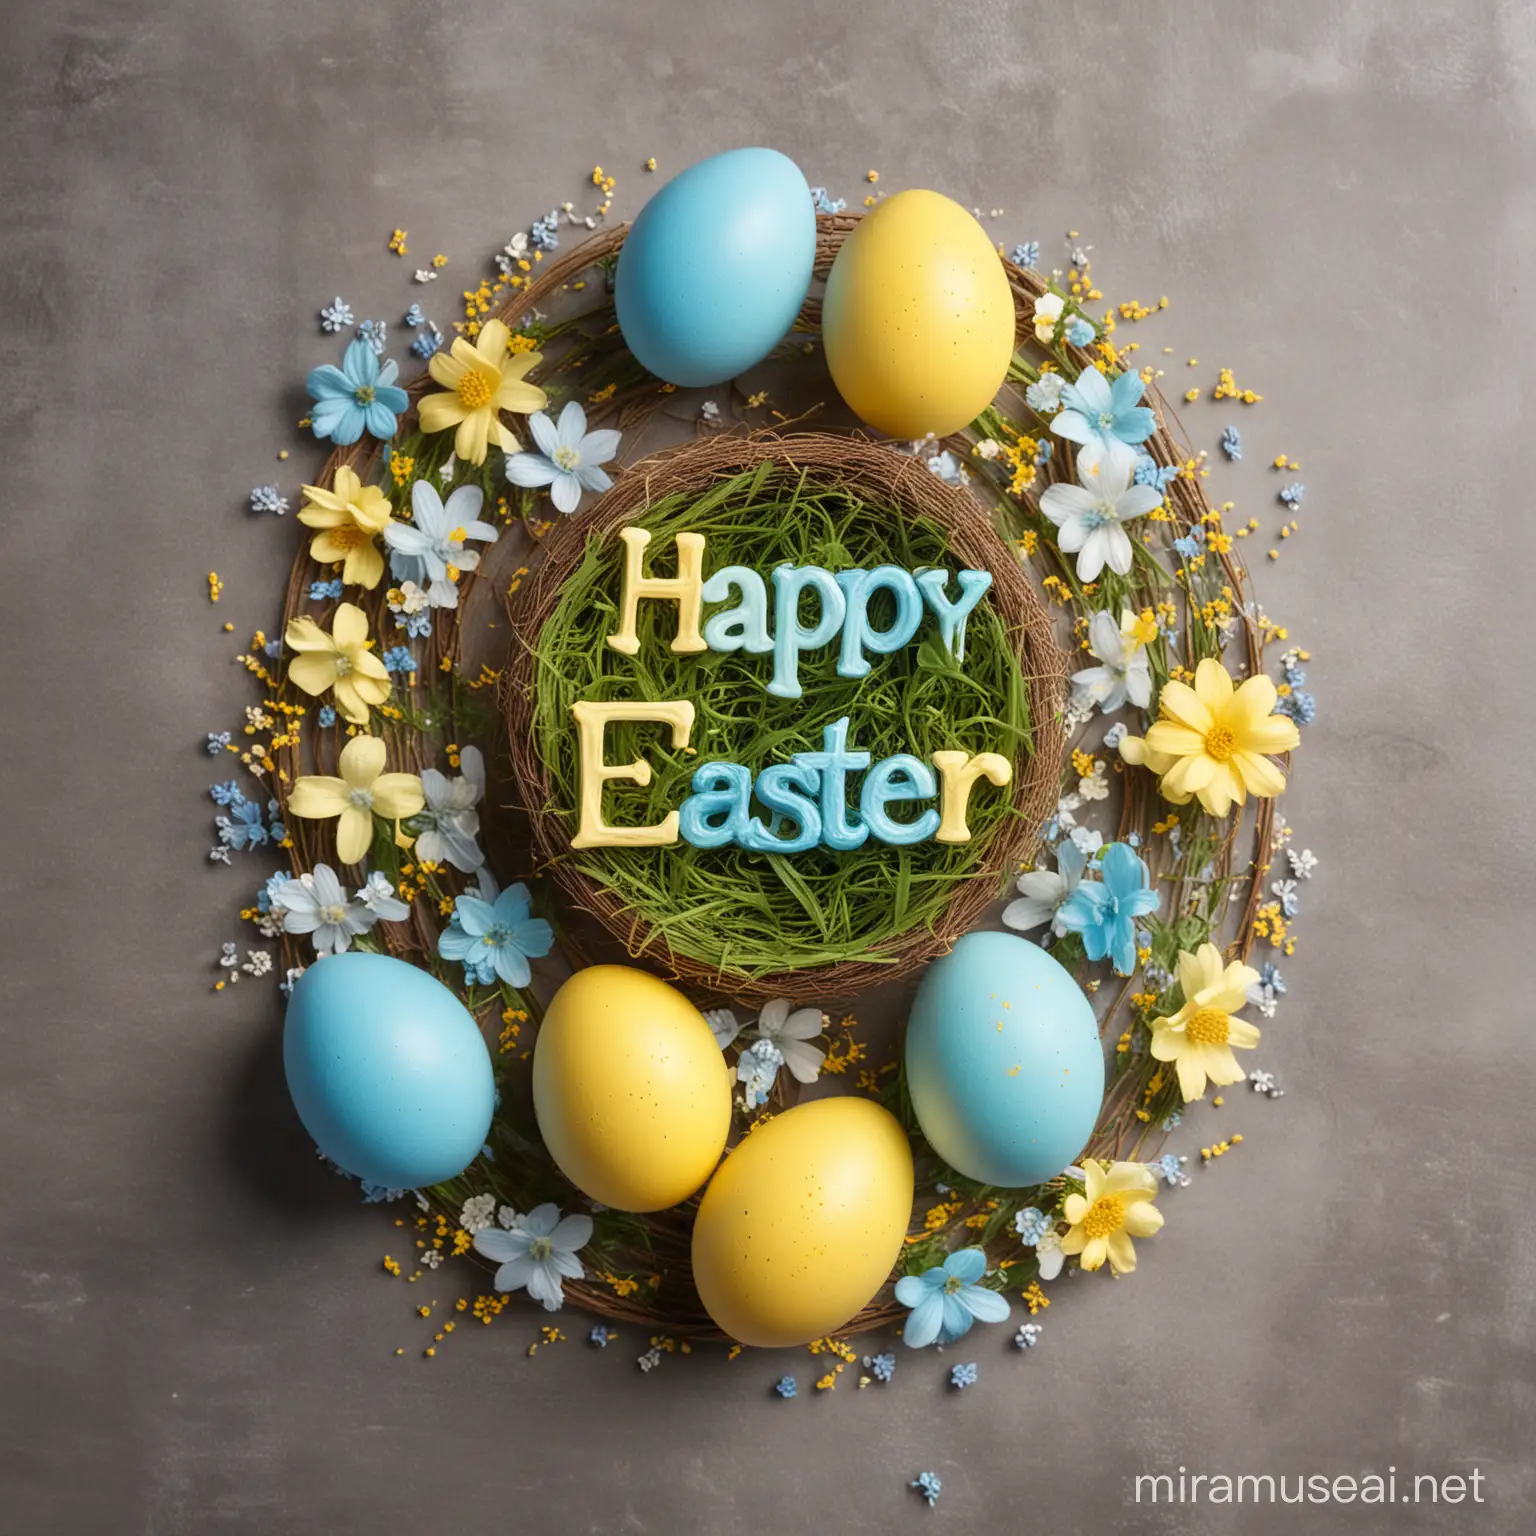 Joyful Easter Celebration with Vibrant Yellow and Blue Tones